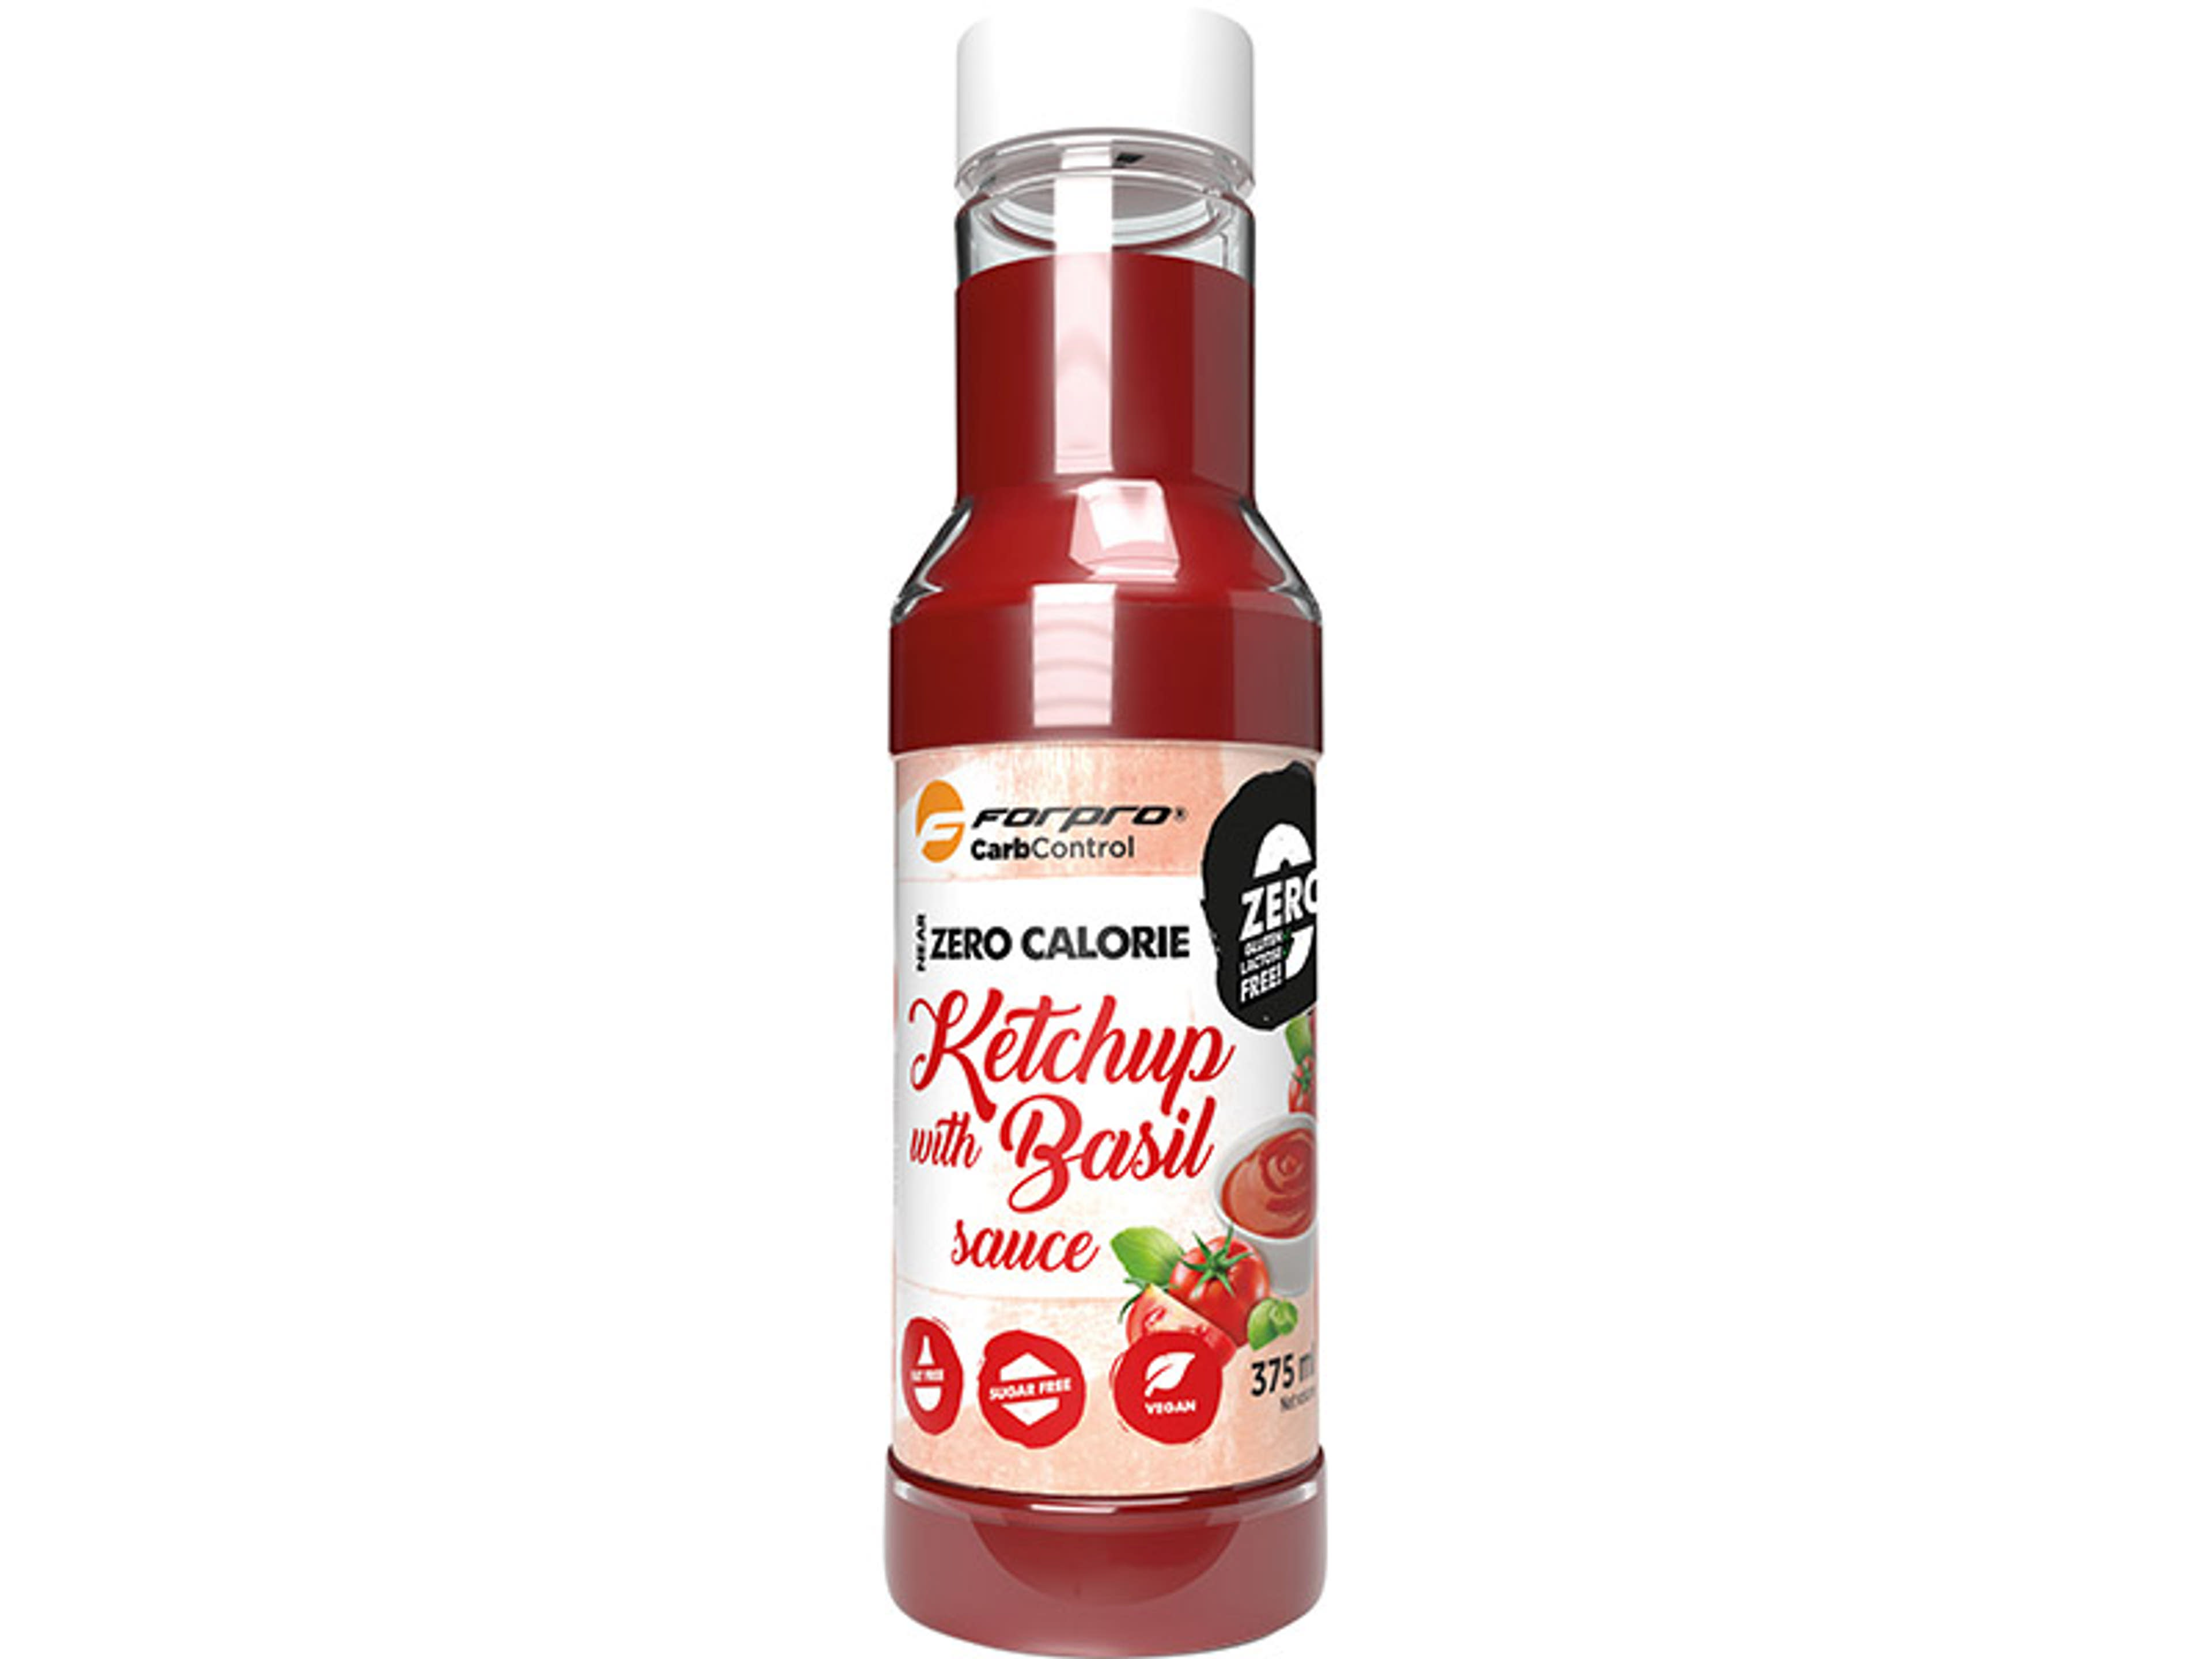 Forpro Carb Control Near Zero Calorie ketchup - 375 ml